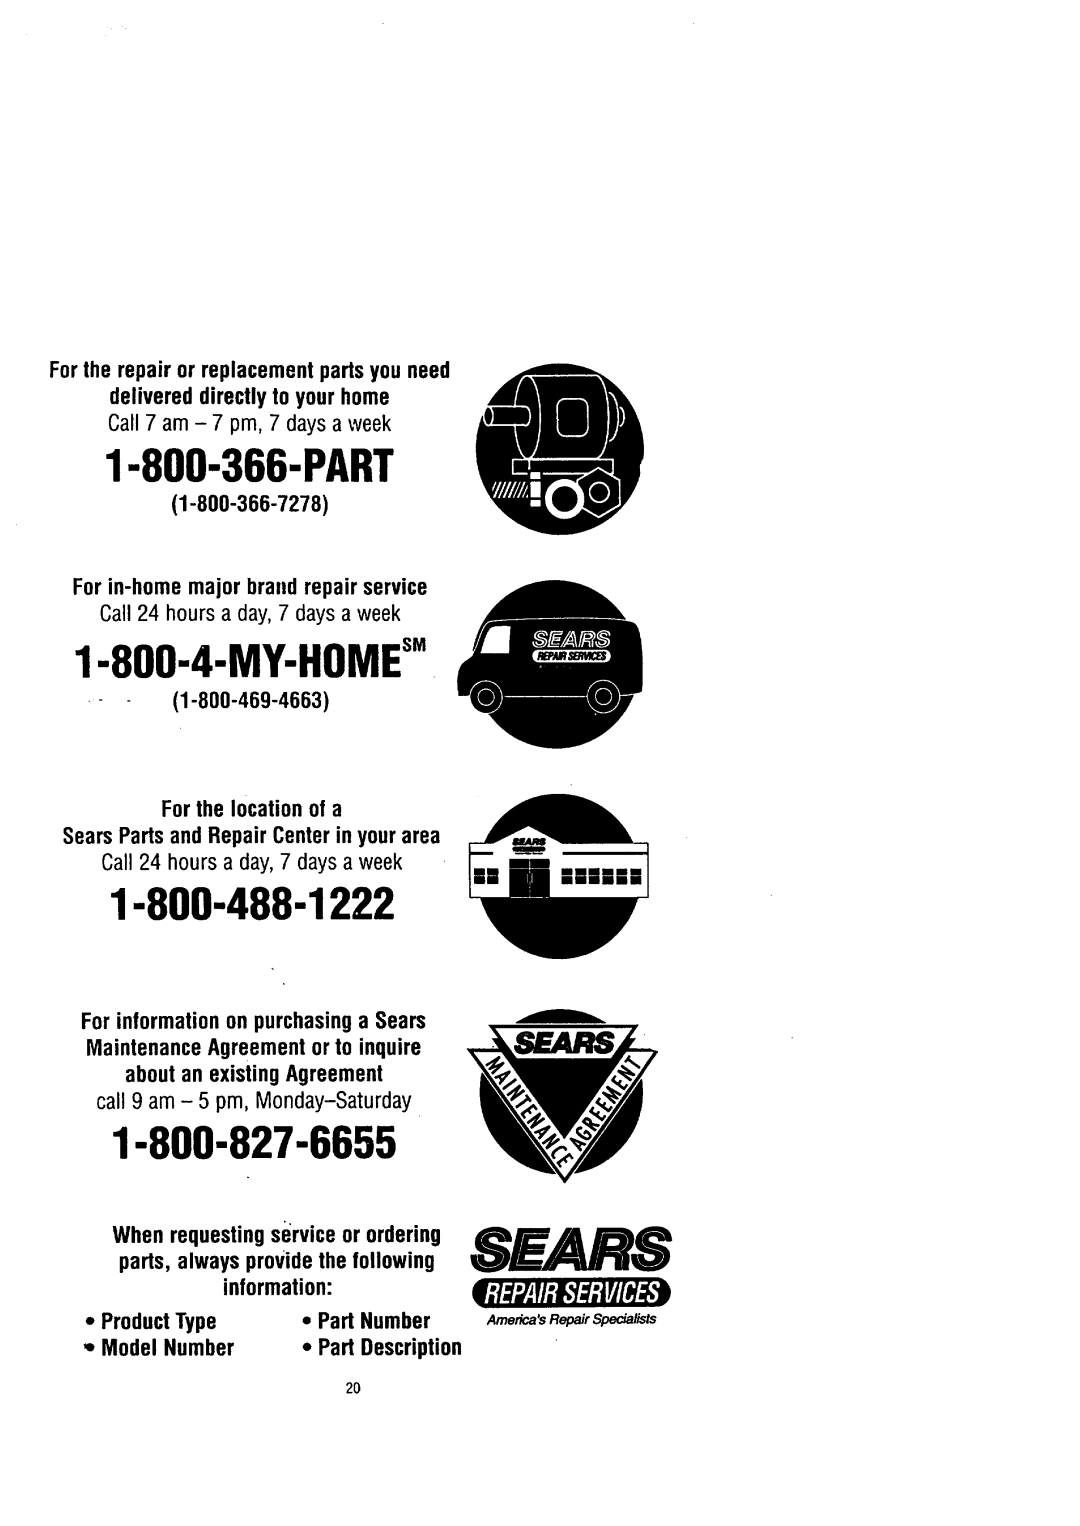 Sears 14172, 14171, 14174, 14175 owner manual ProductType, Part Number, Model Number, Part Description 